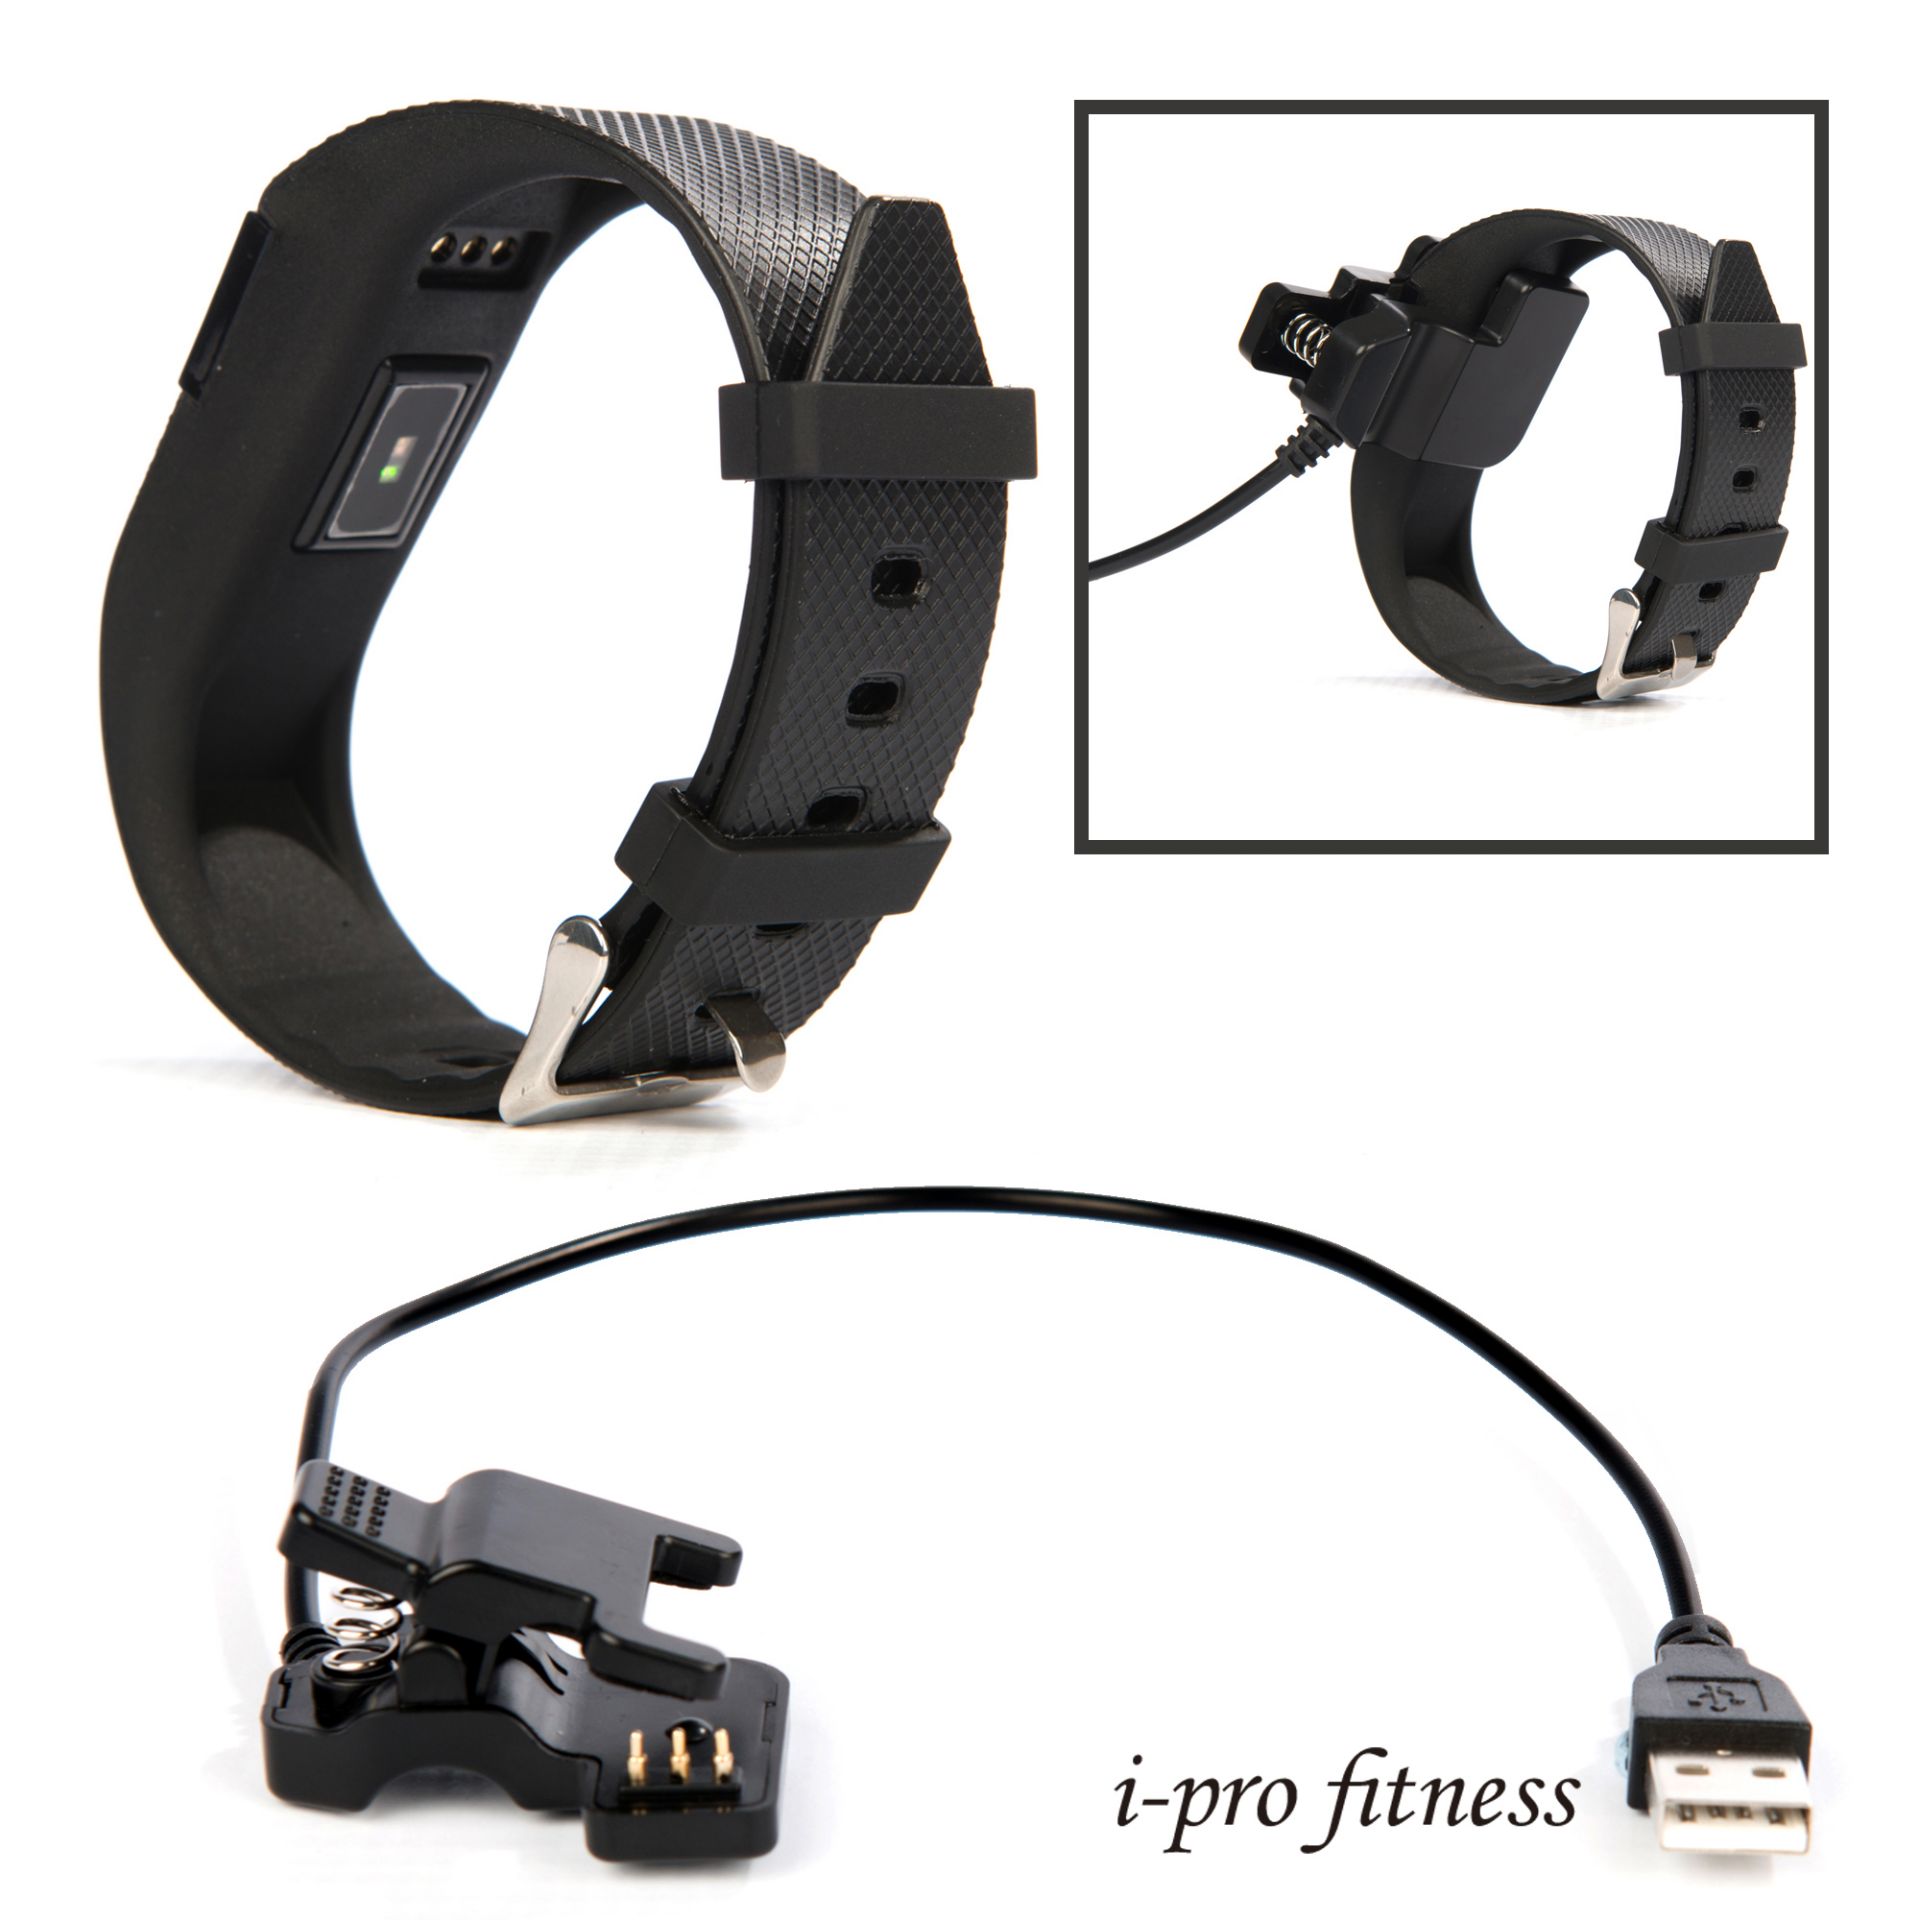 Fitness Tracker i-pro fitness, Bluetooth 4.0 Sports Smart Bracelet, Heart Rate Monitor, Pedometer. - Bild 7 aus 8